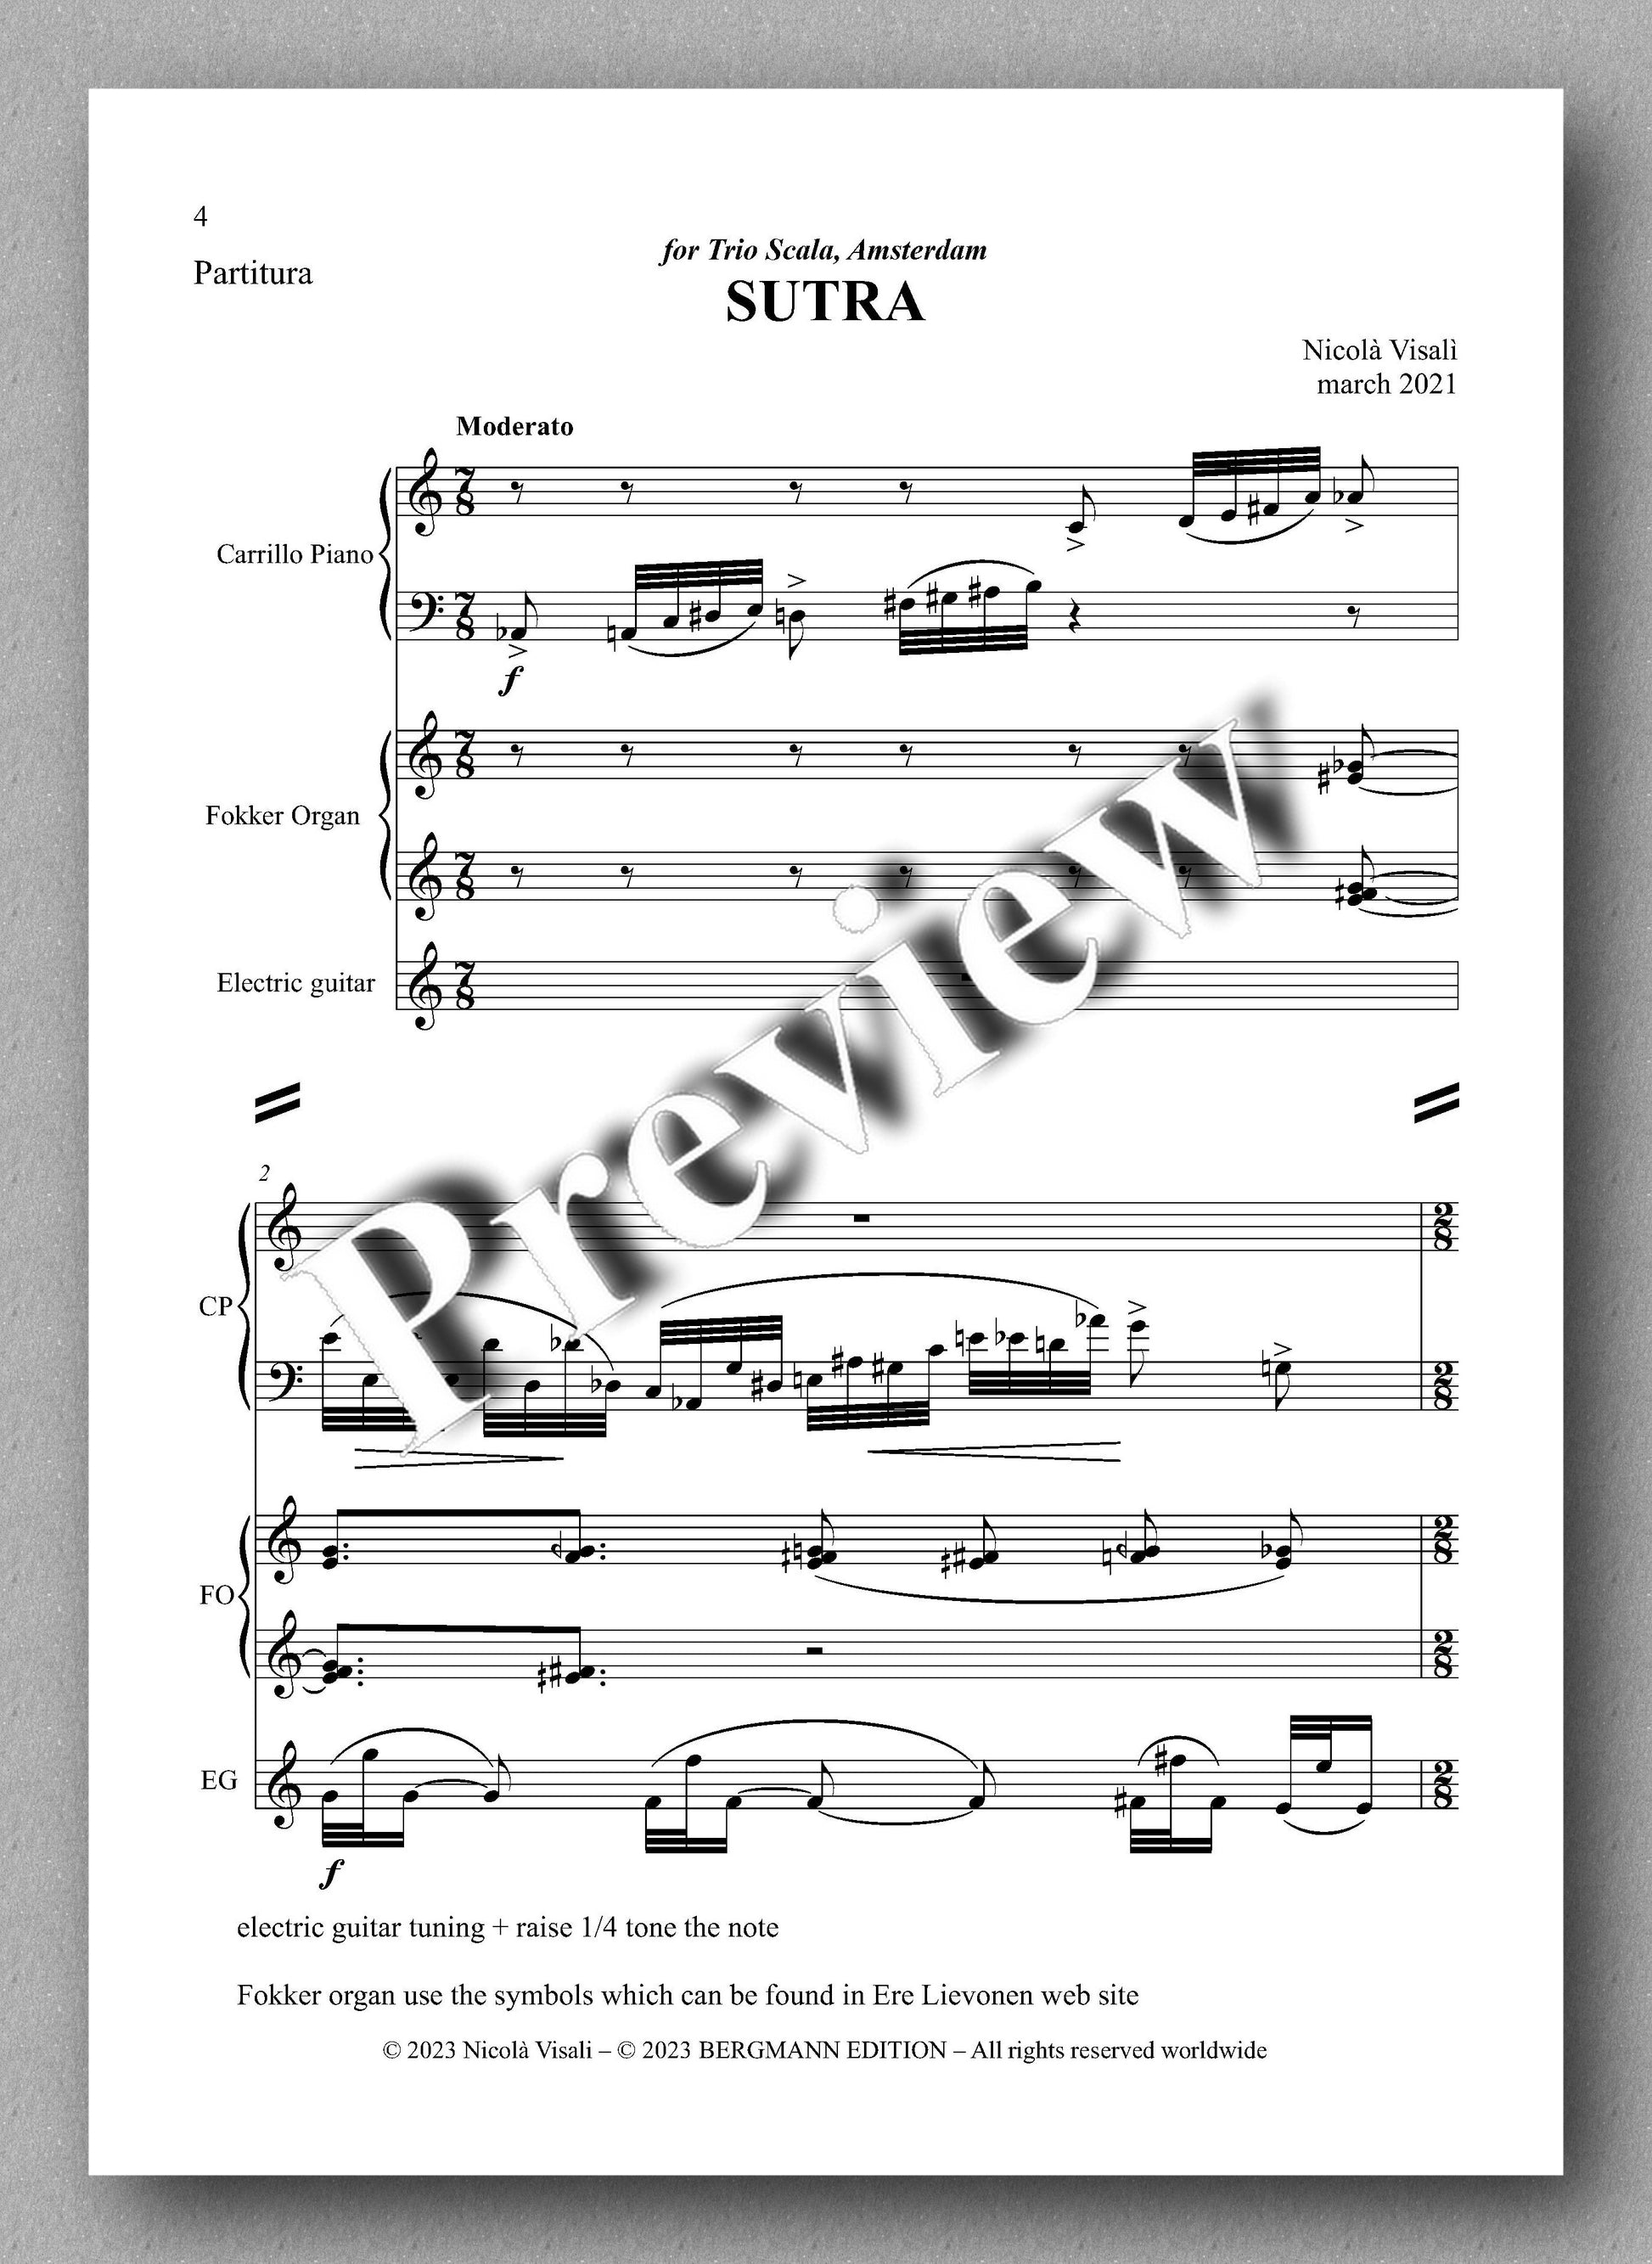 Nicolà Visalì, SUTRA - preview of the music score 1